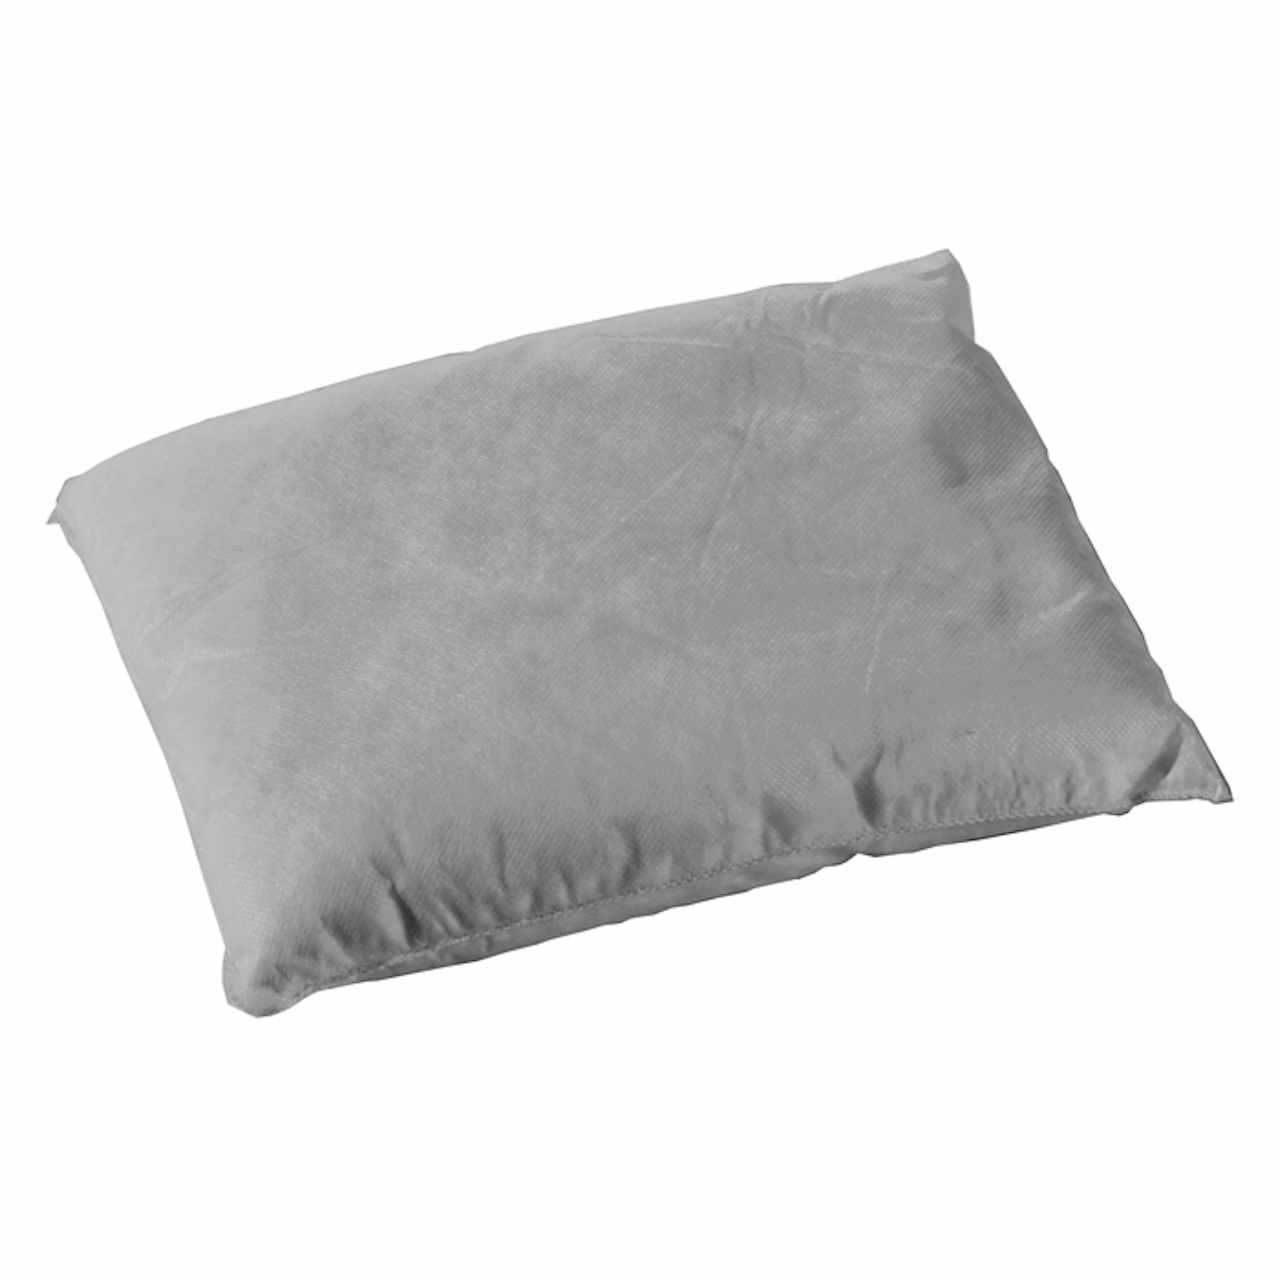 Spilchoice Maintenance Cushions